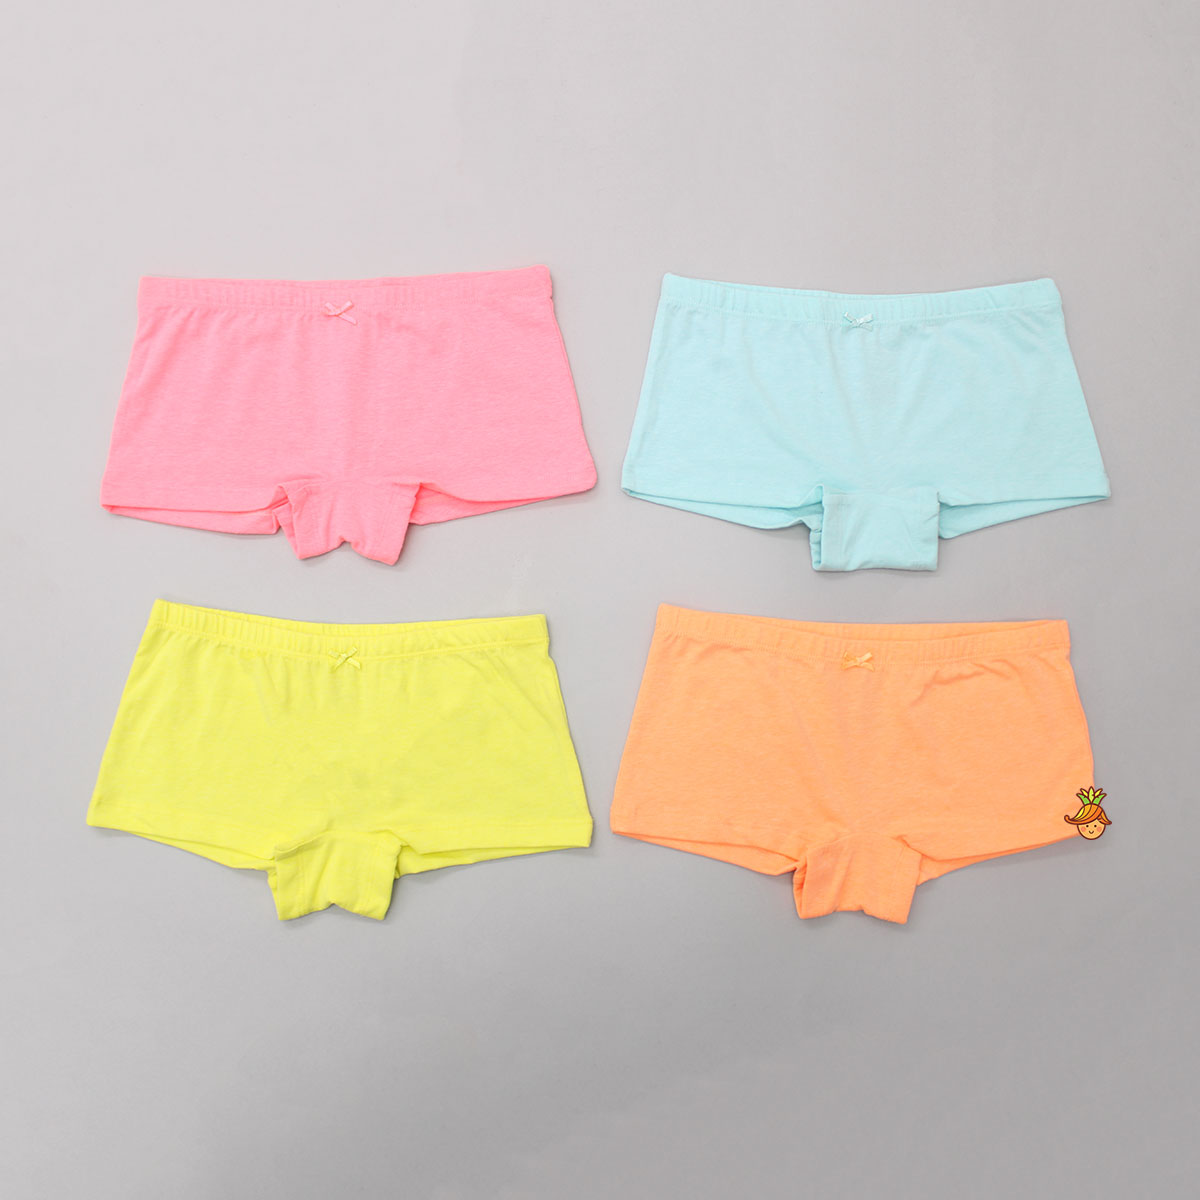 Unicorn Printed Underwear - Set of 4